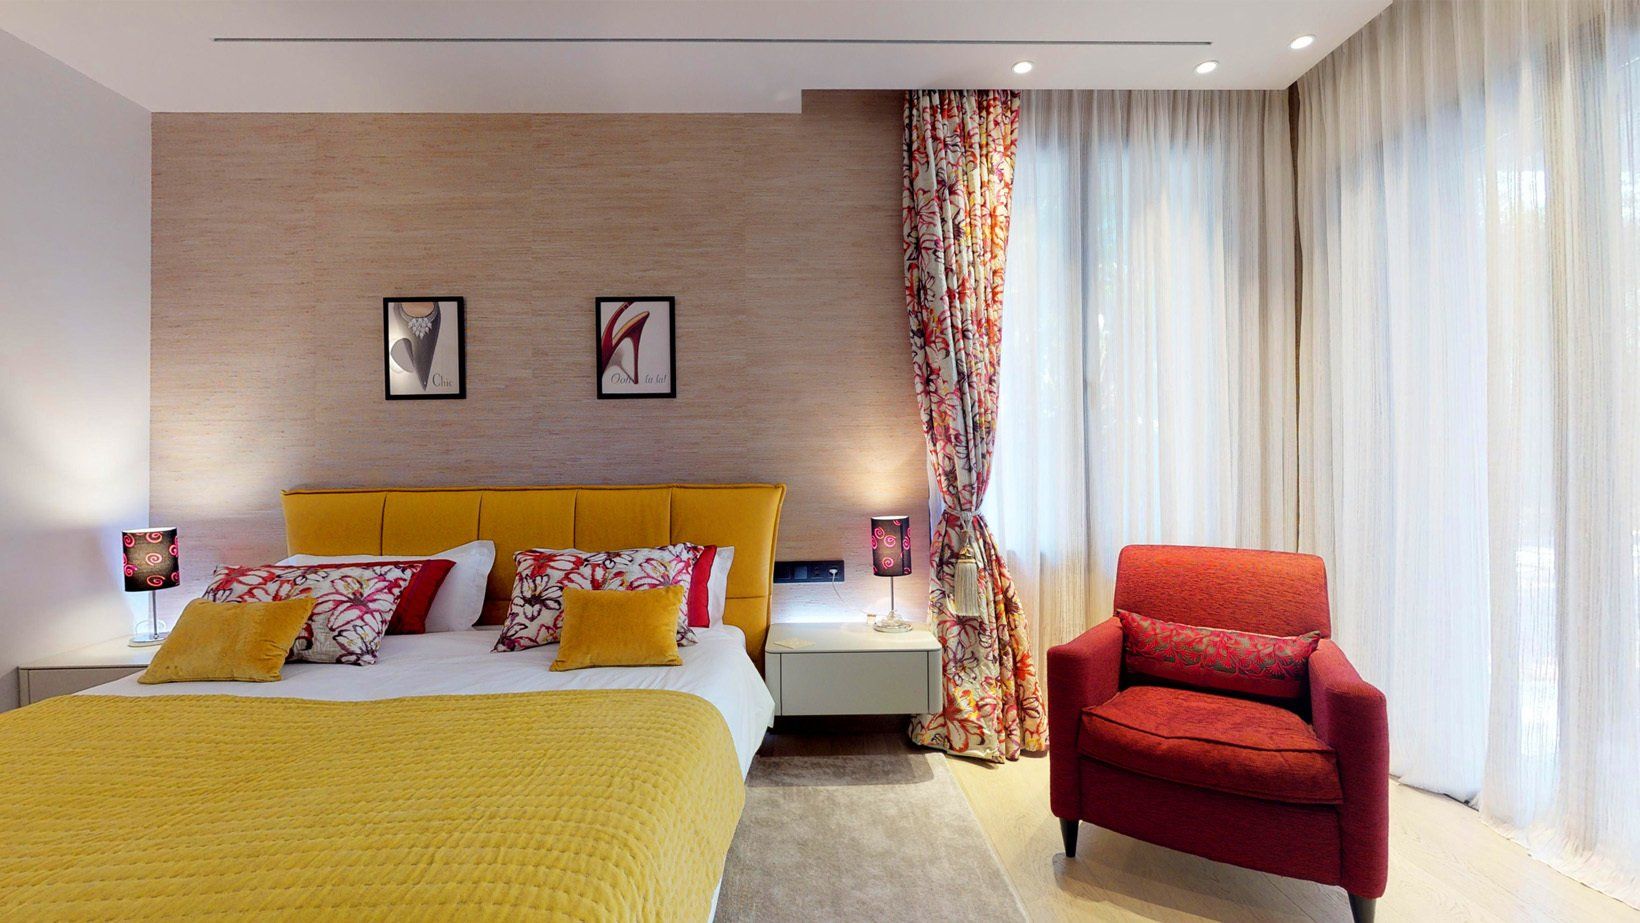 interior design project in La Zagaleta Marbella Spain - image of yellow bedroom 2